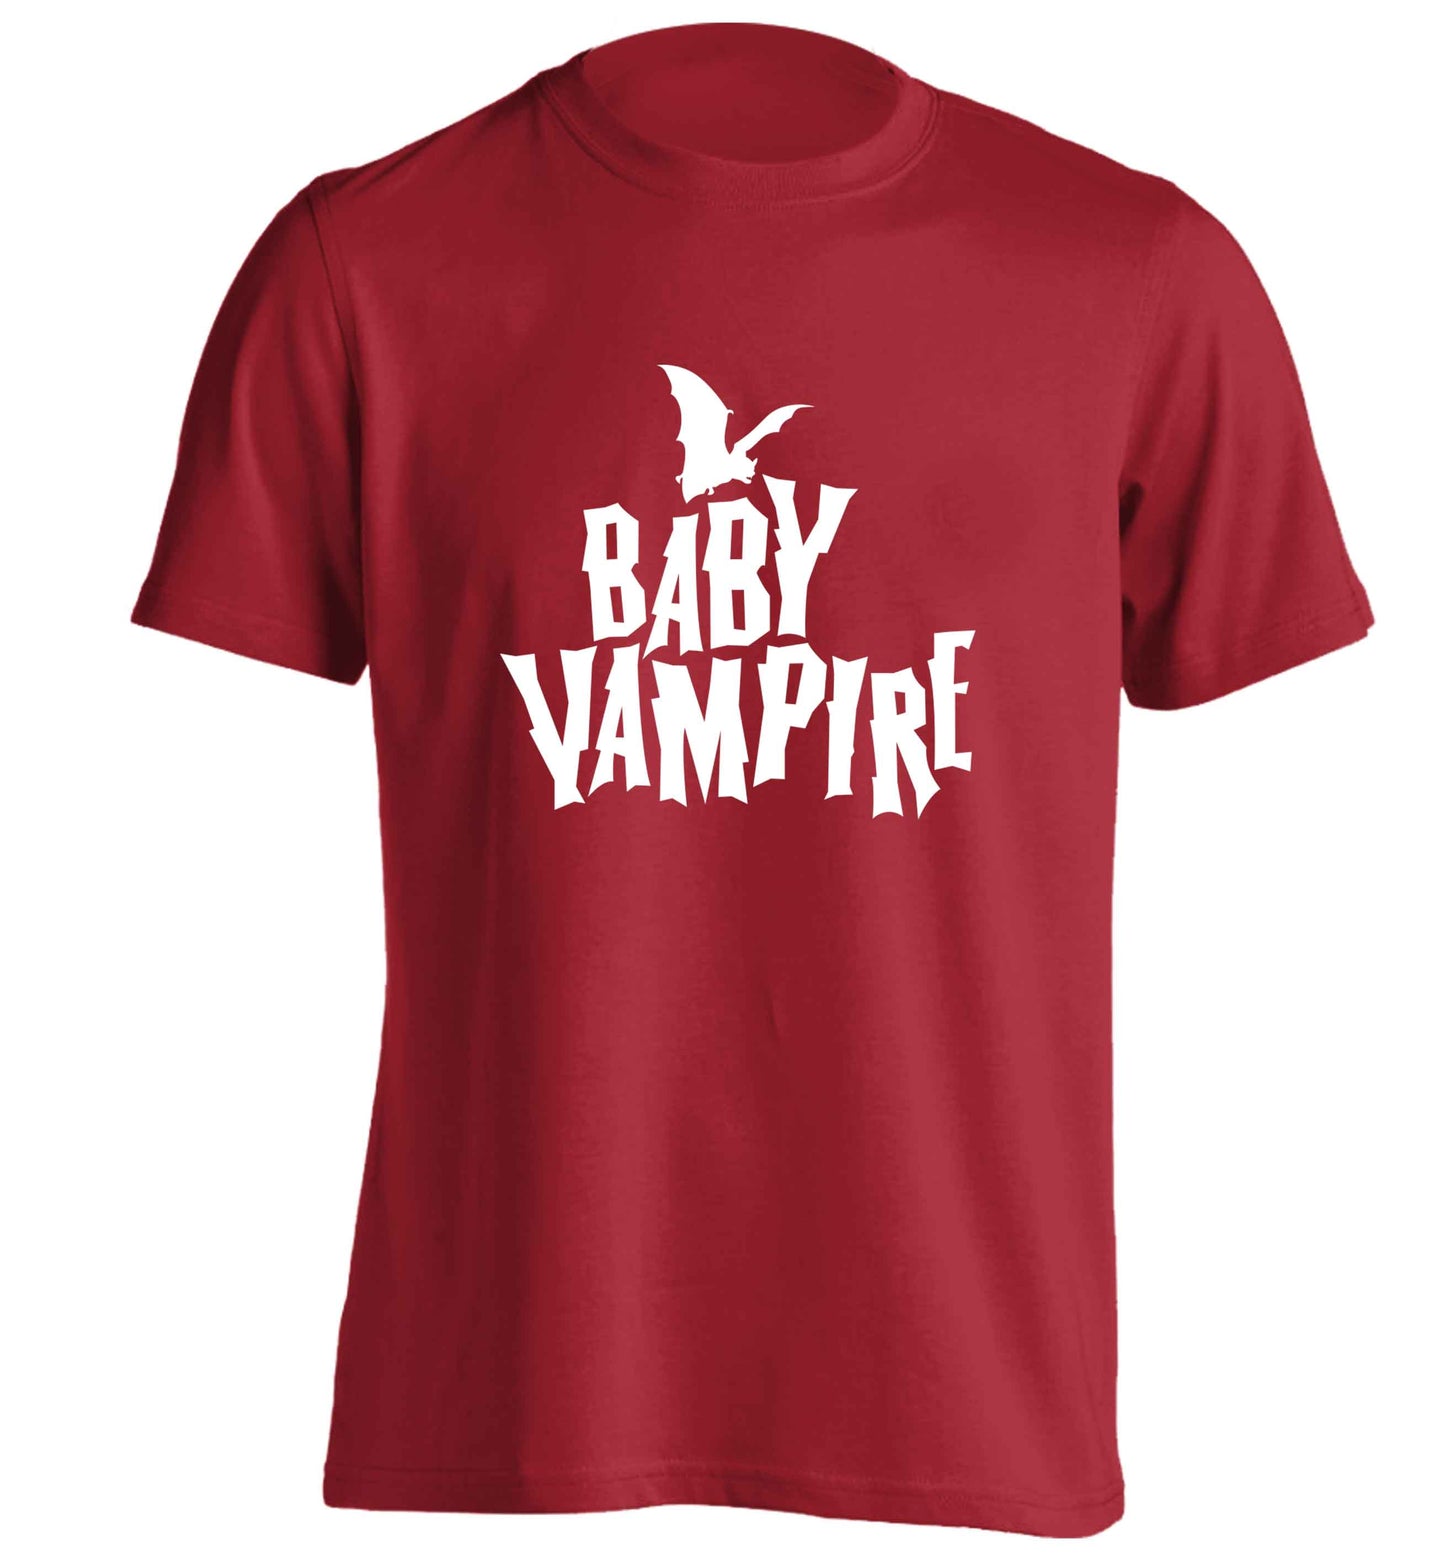 Baby vampire adults unisex red Tshirt 2XL